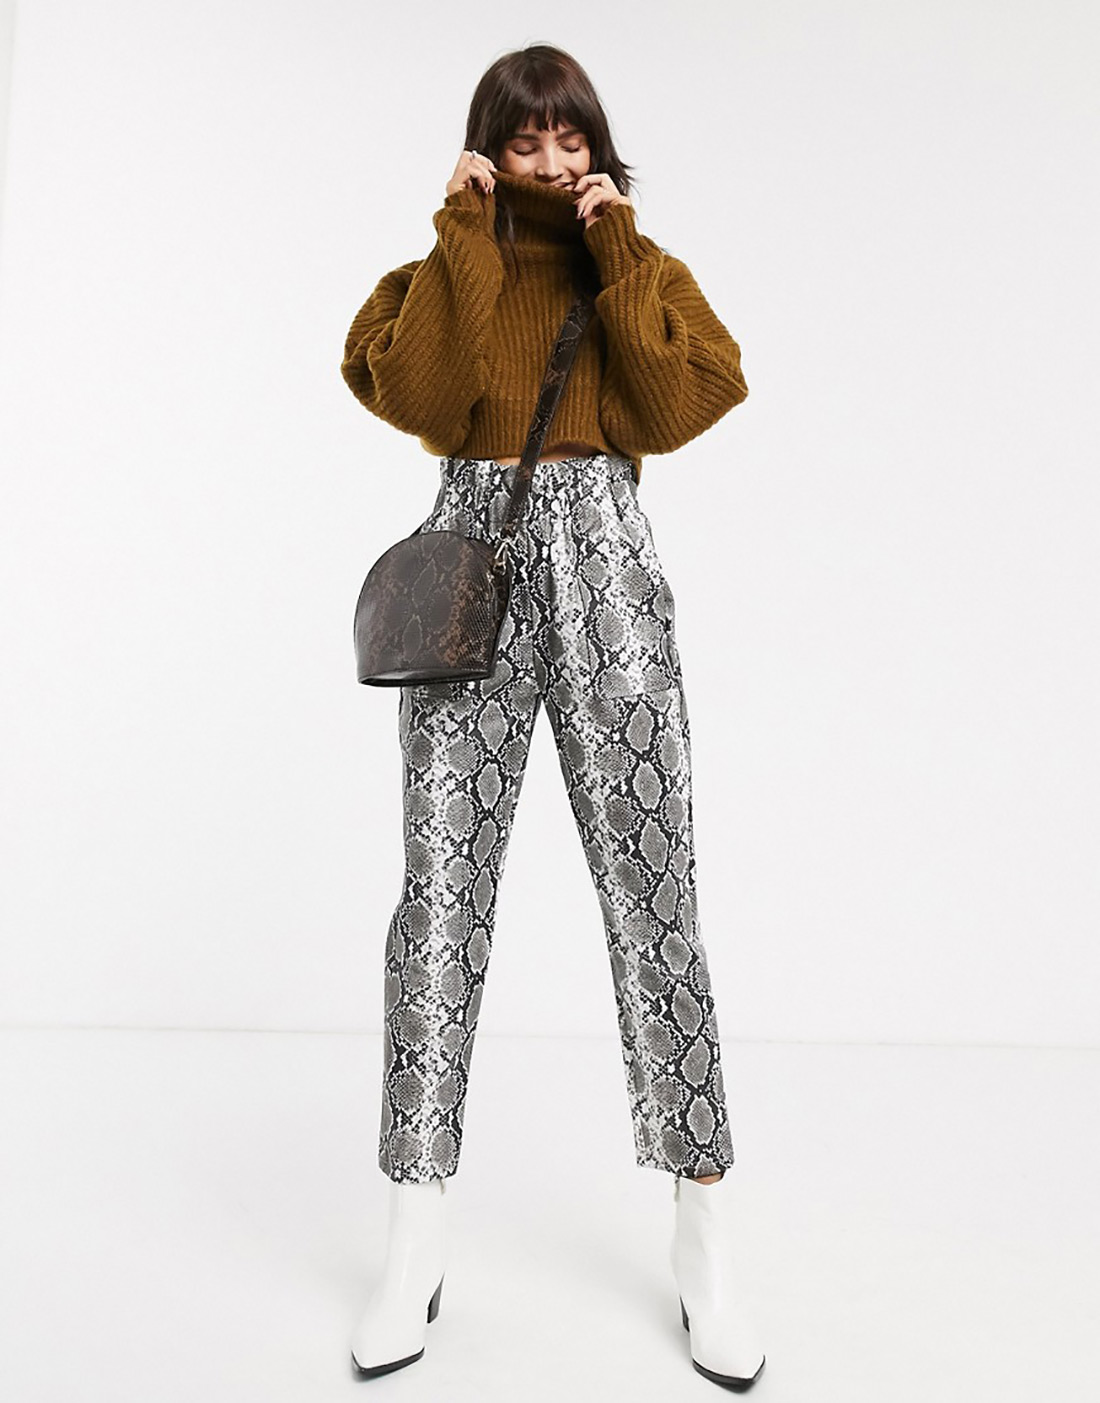 street style zagreb ženska moda jesen zima 2019/2020 kako kombinirati zmijski uzorka špica zagreb zagrebačka špica asos topshop h&m mytheresa designers look